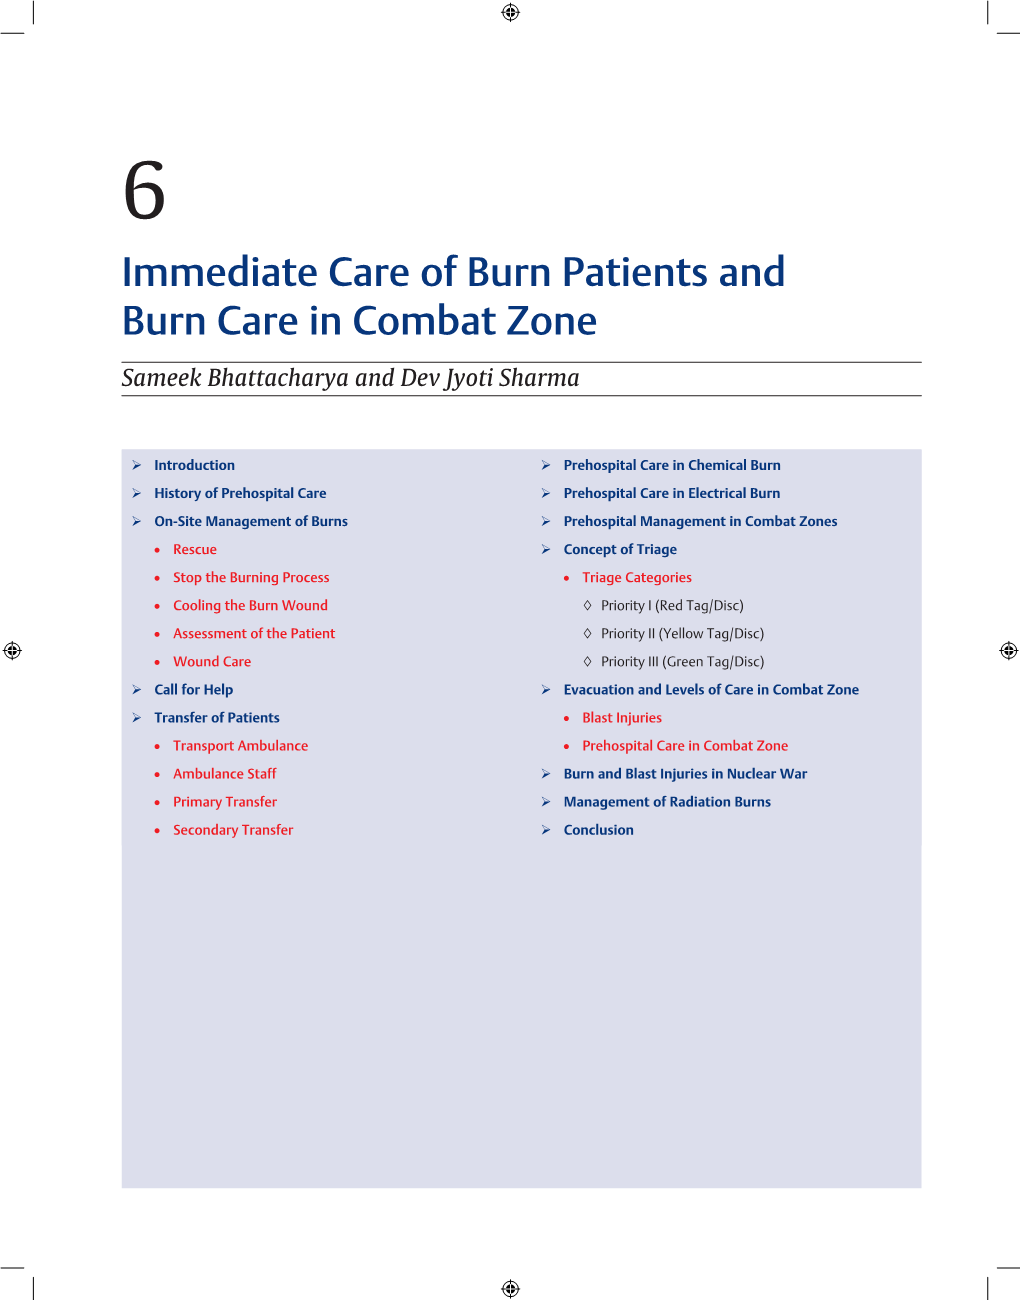 Immediate Care of Burn Patients and Burn Care in Combat Zone